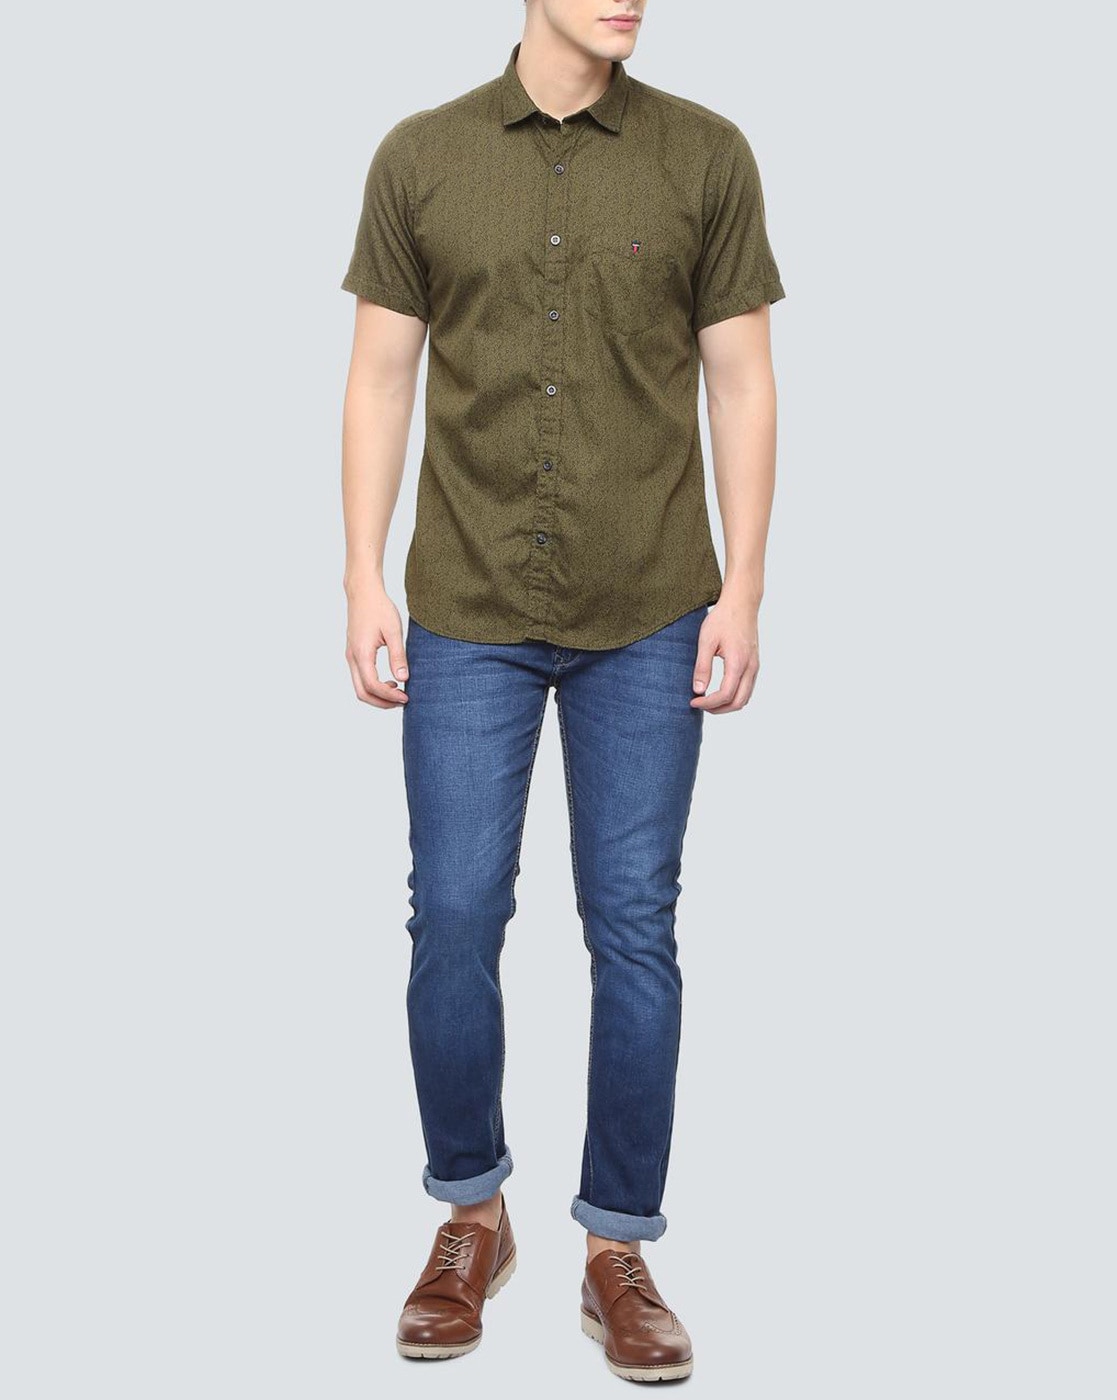 Louis Philippe sea green half sleeves t shirt - G3-MTS16308 